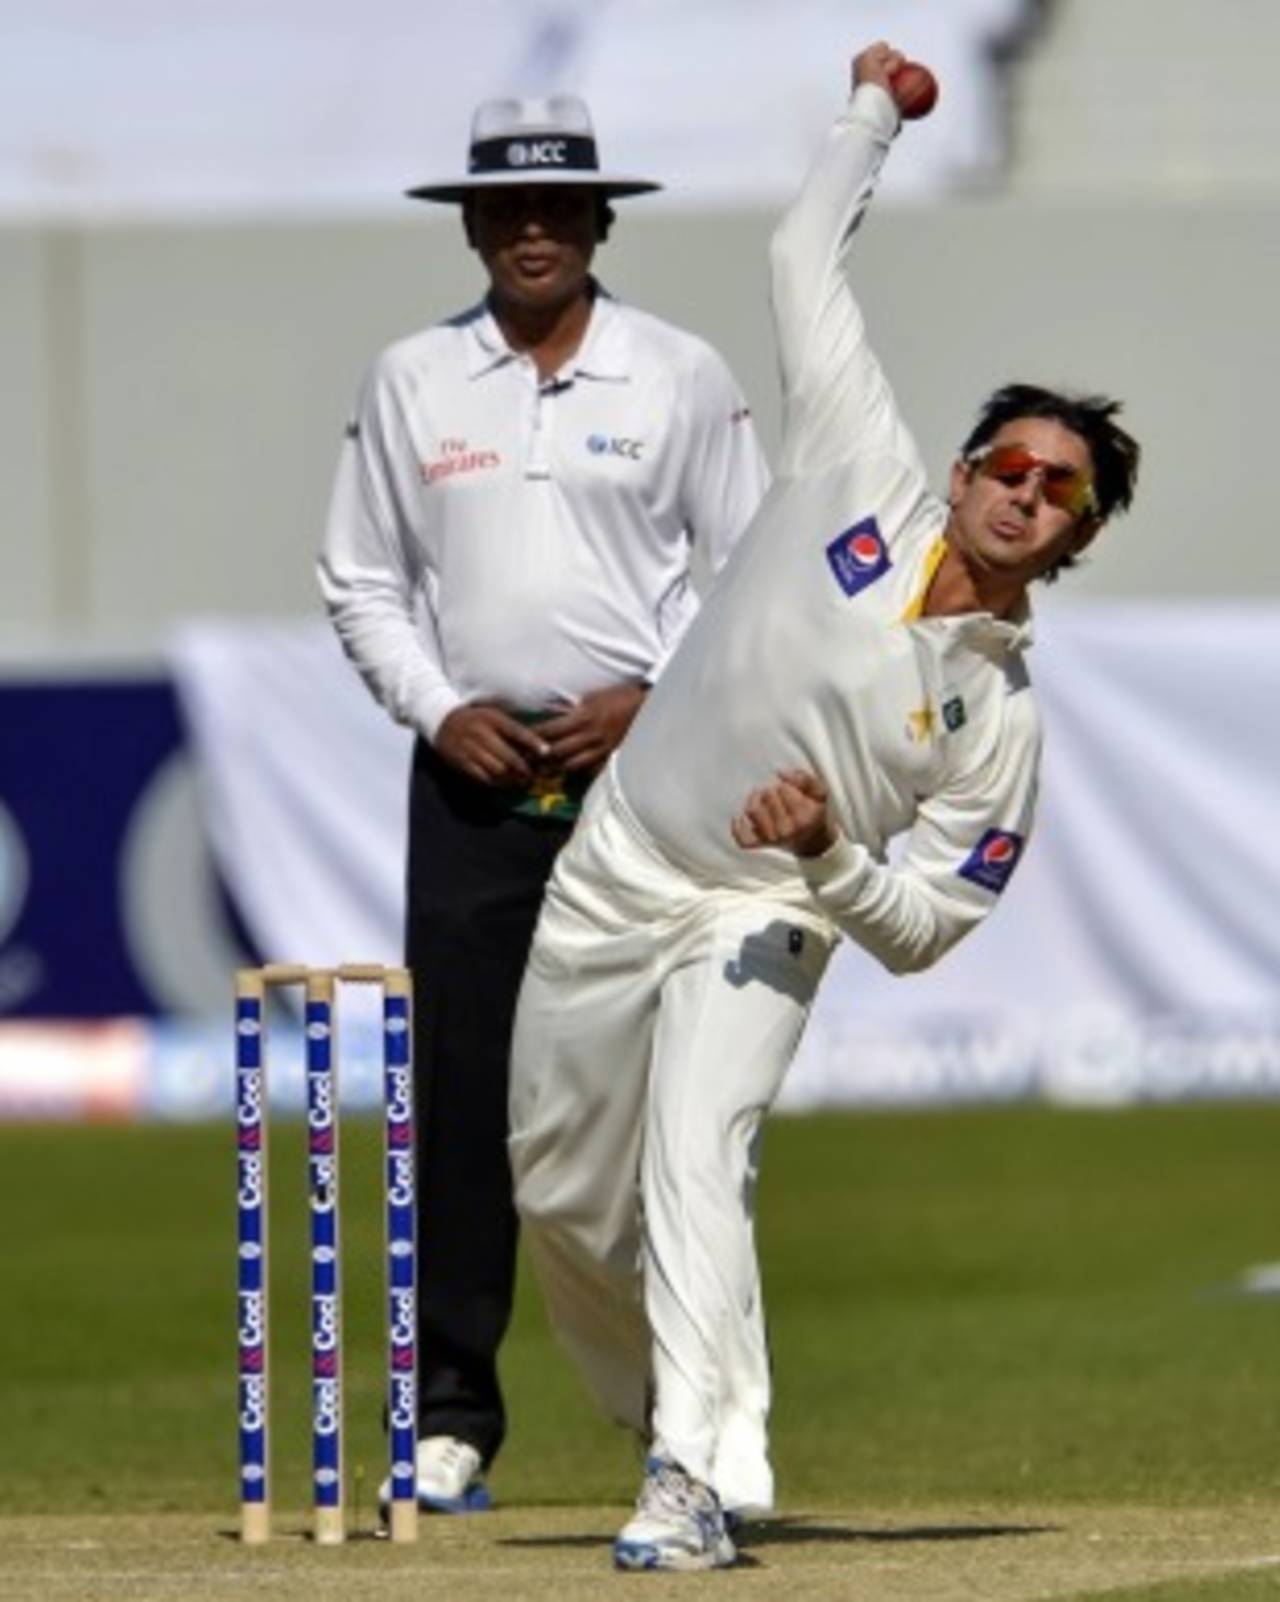 Saeed Ajmal went wicket-less but Mohammad Akram wasn't giving up on him yet&nbsp;&nbsp;&bull;&nbsp;&nbsp;Associated Press